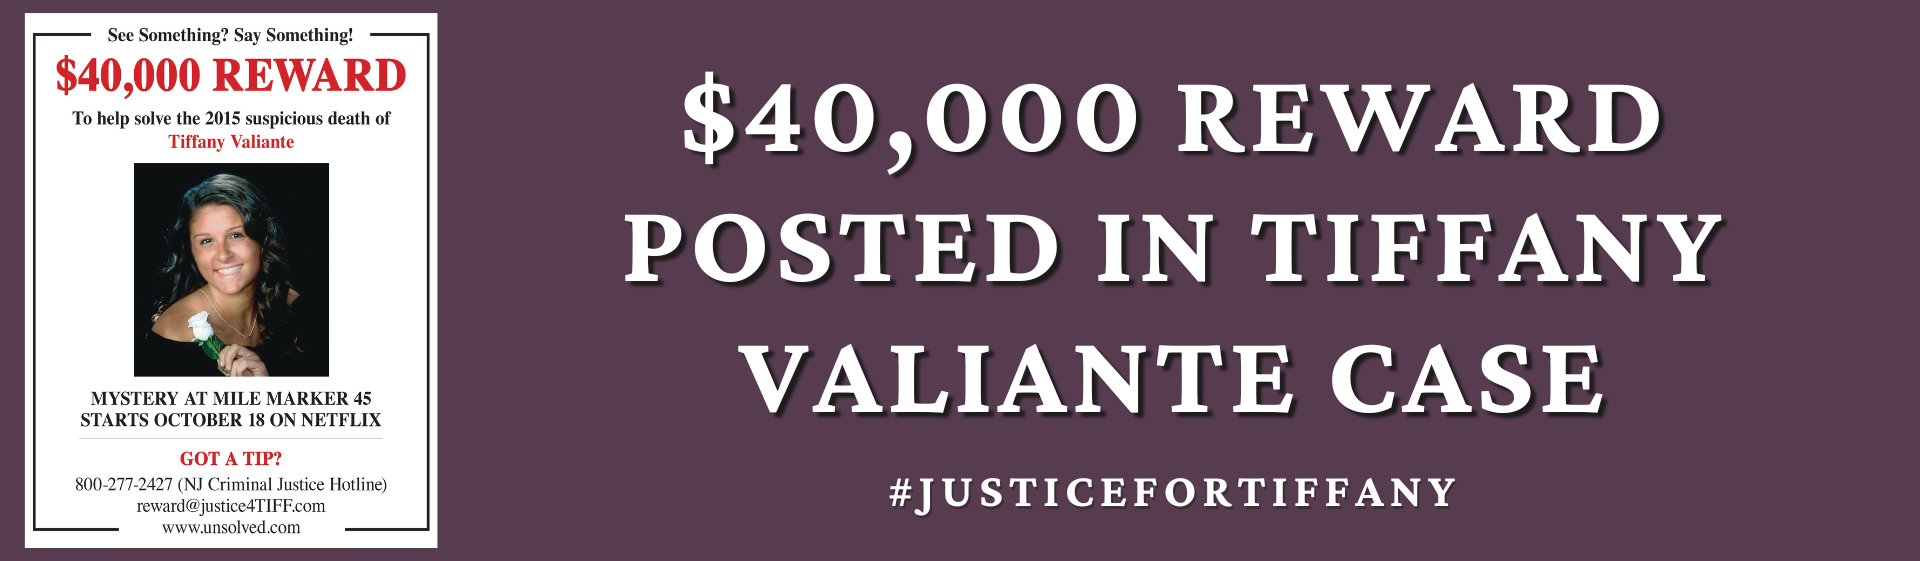 $40,000 Reward Posted in Tiffany Valiante Case